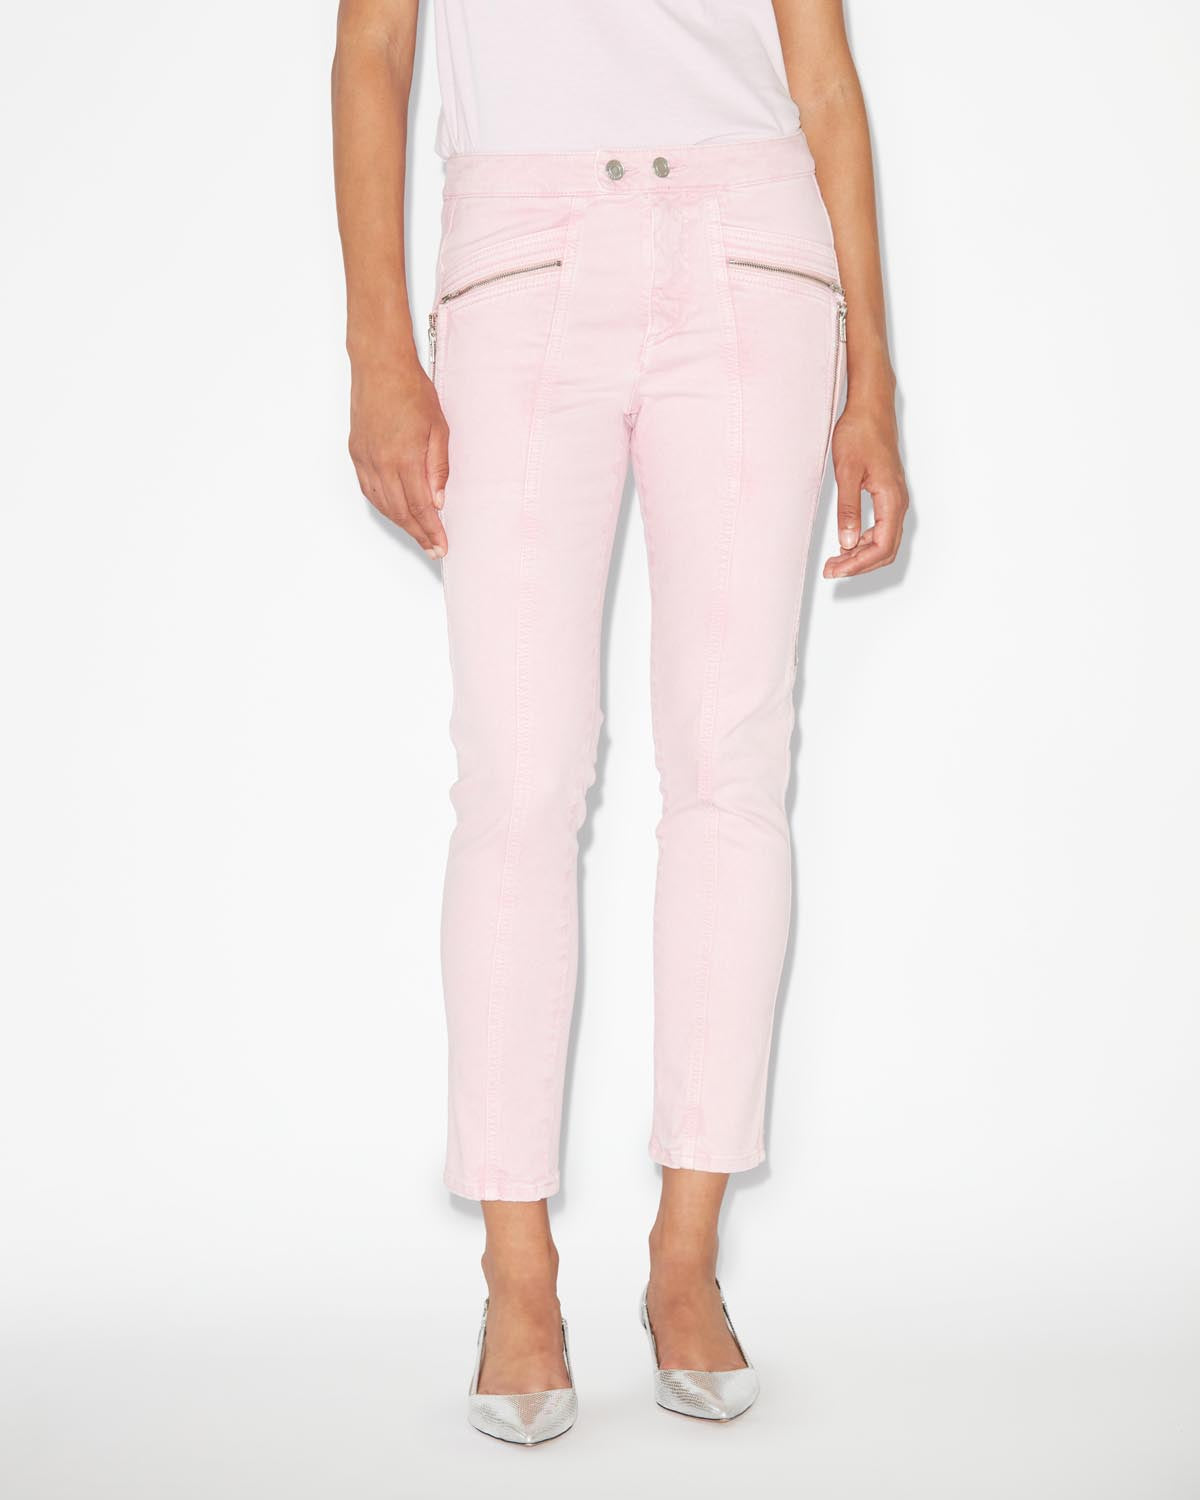 Pantalones prezi Woman Light pink 5